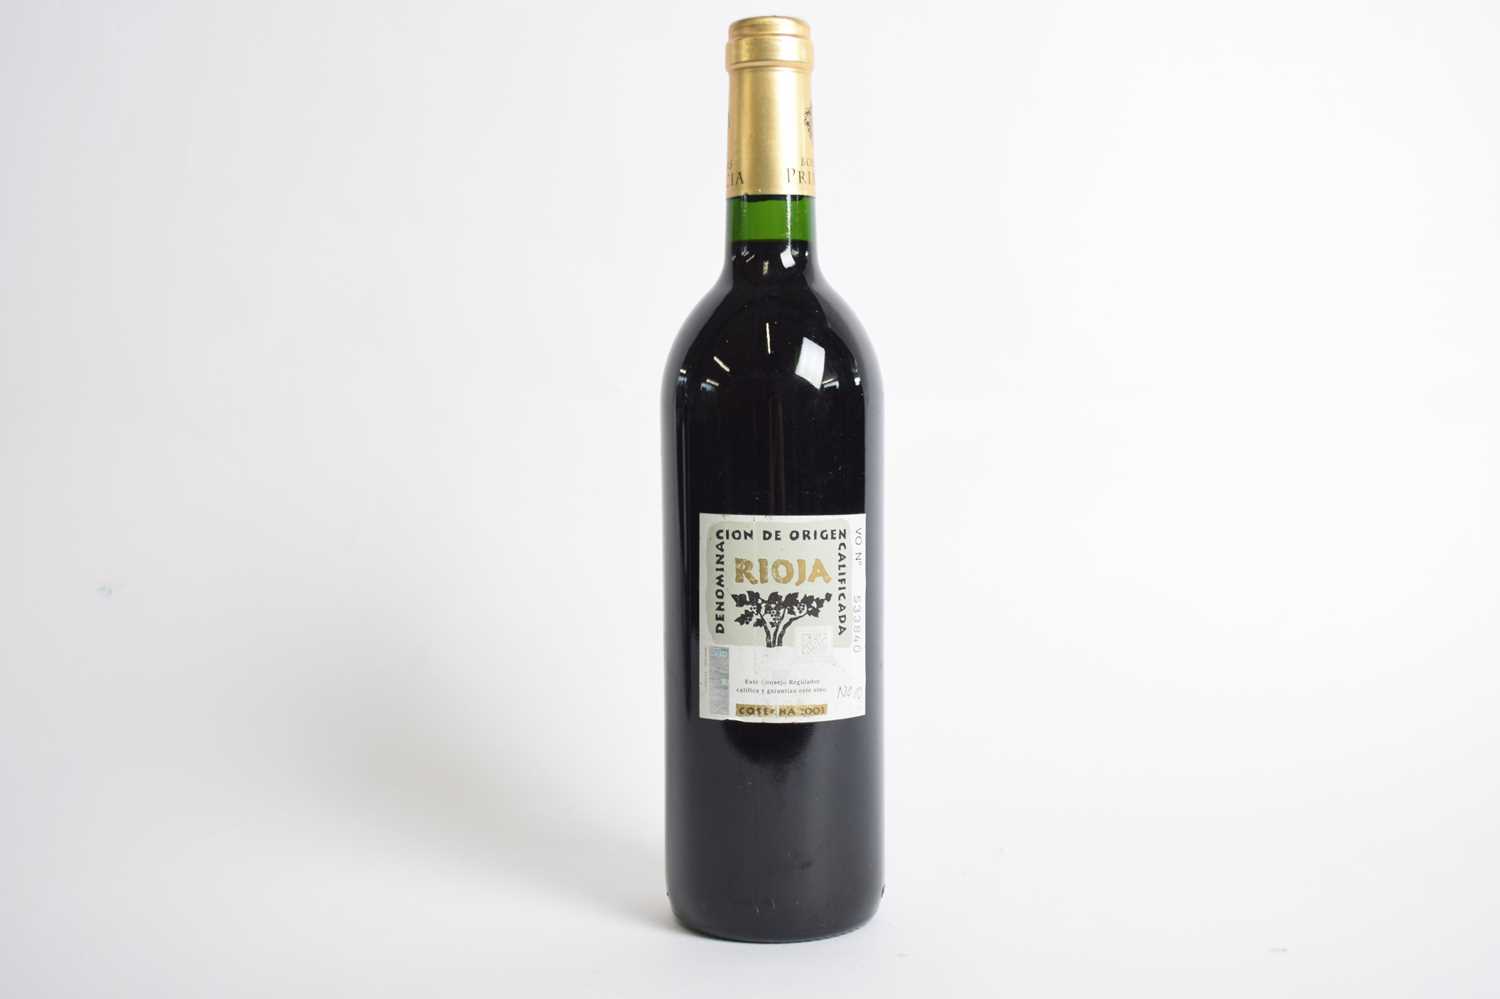 One bottle Bodegas Primicia Rioja 2003, 75cl - Image 3 of 3